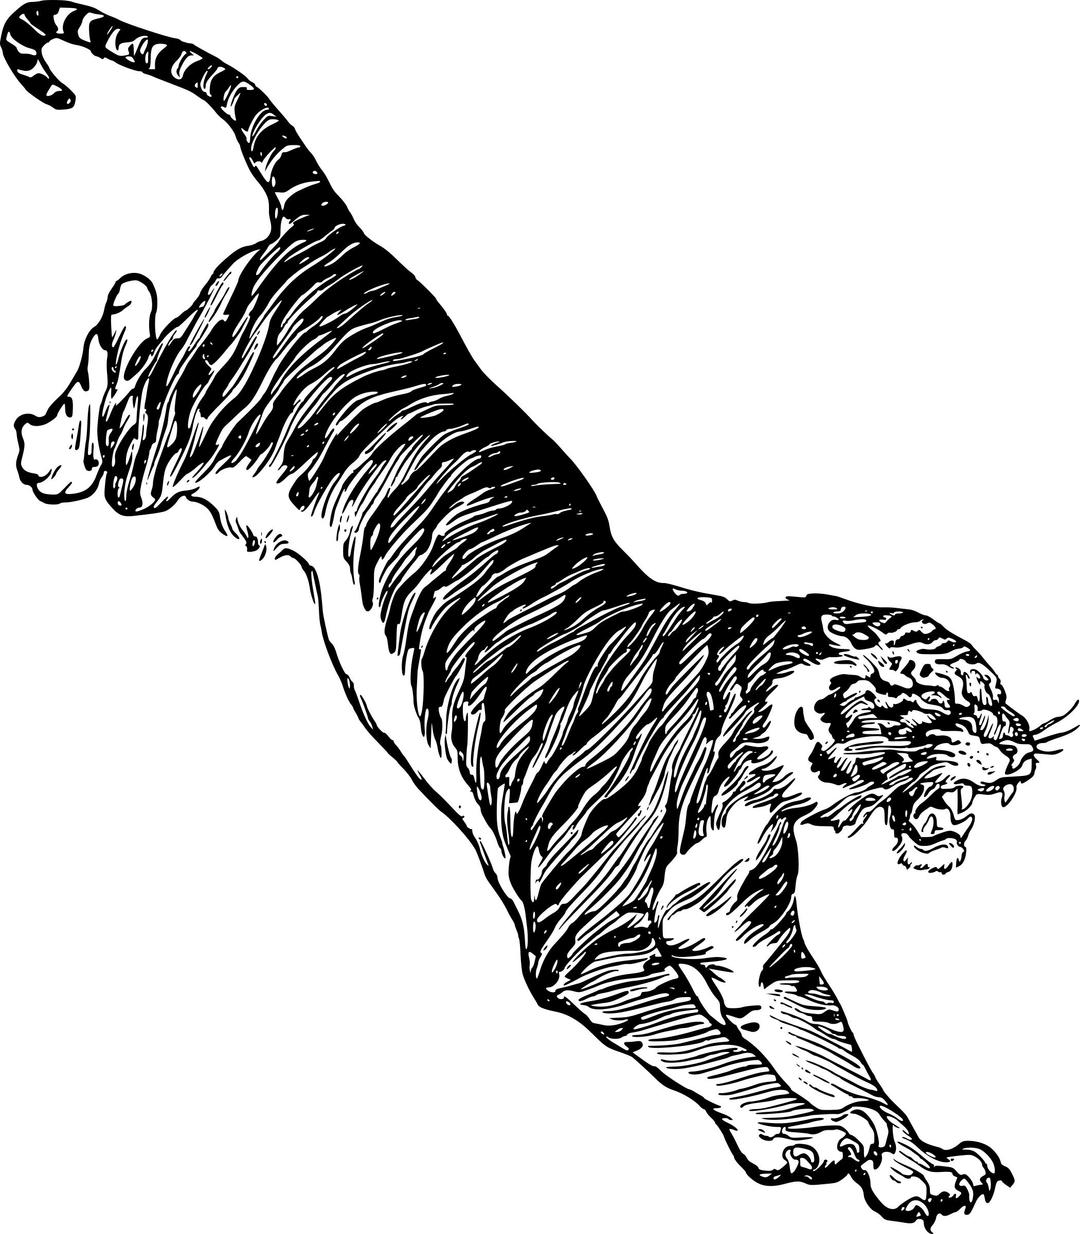 Jumping Tiger png transparent